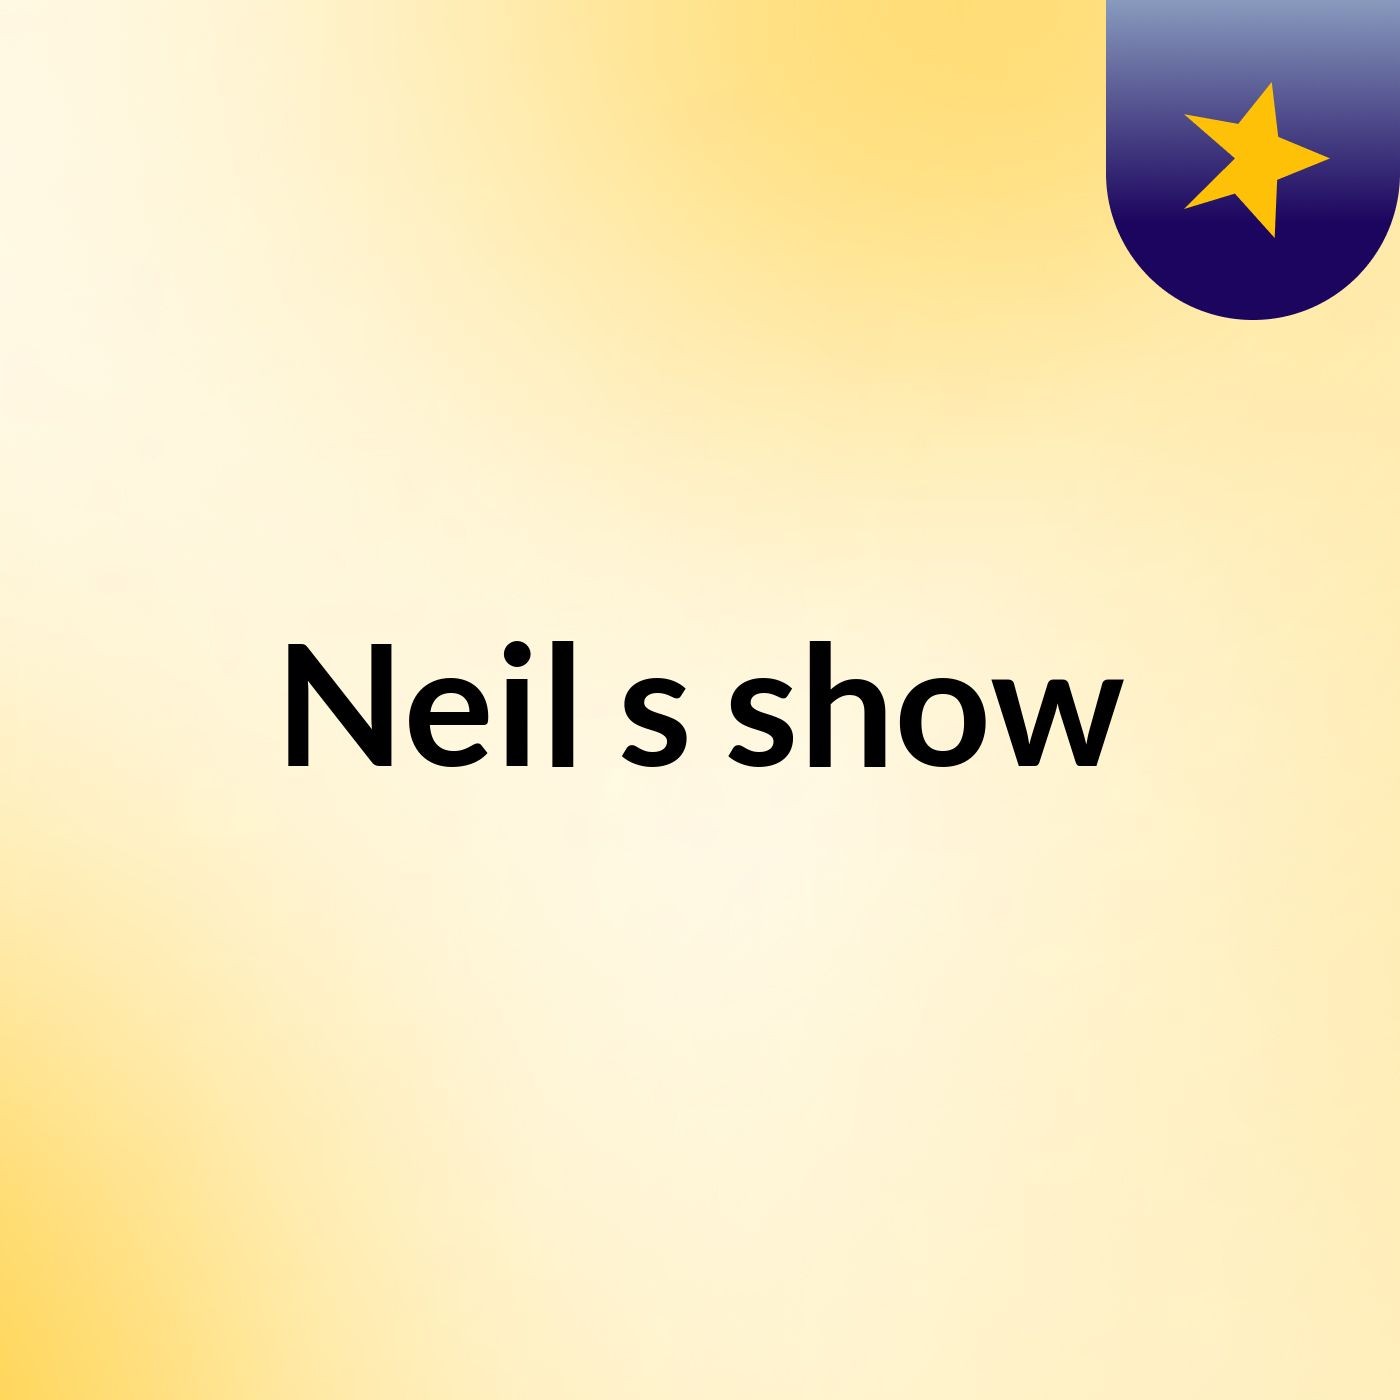 Neil's show